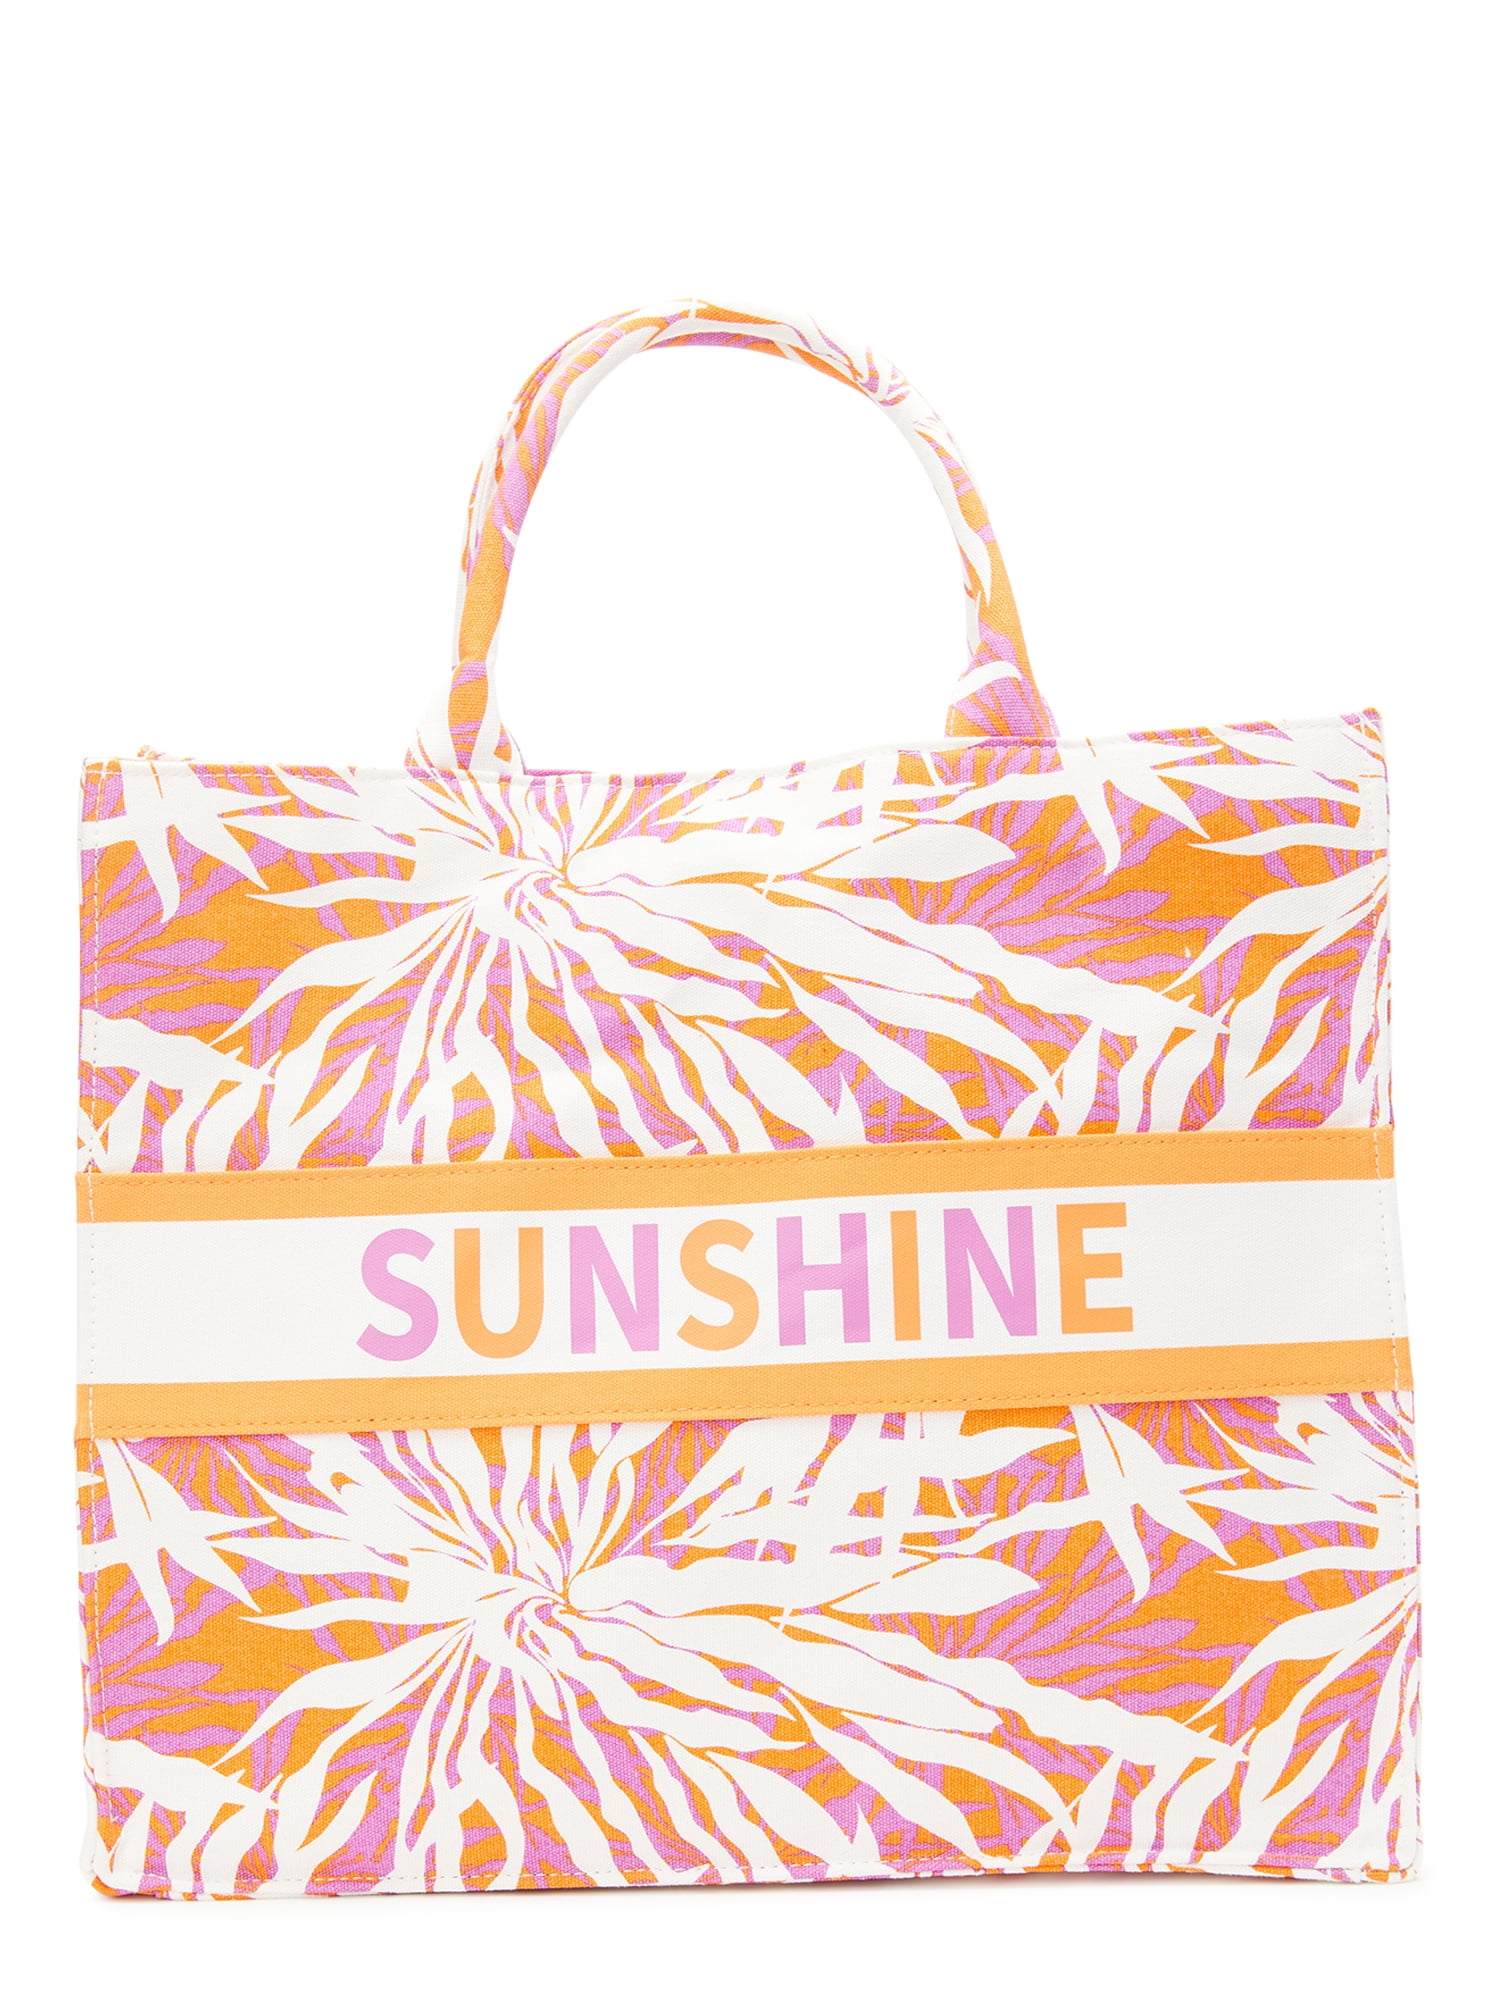 No Boundaries Women's Sunshine Canvas Print Beach Tote Handbag, Orange/Pink